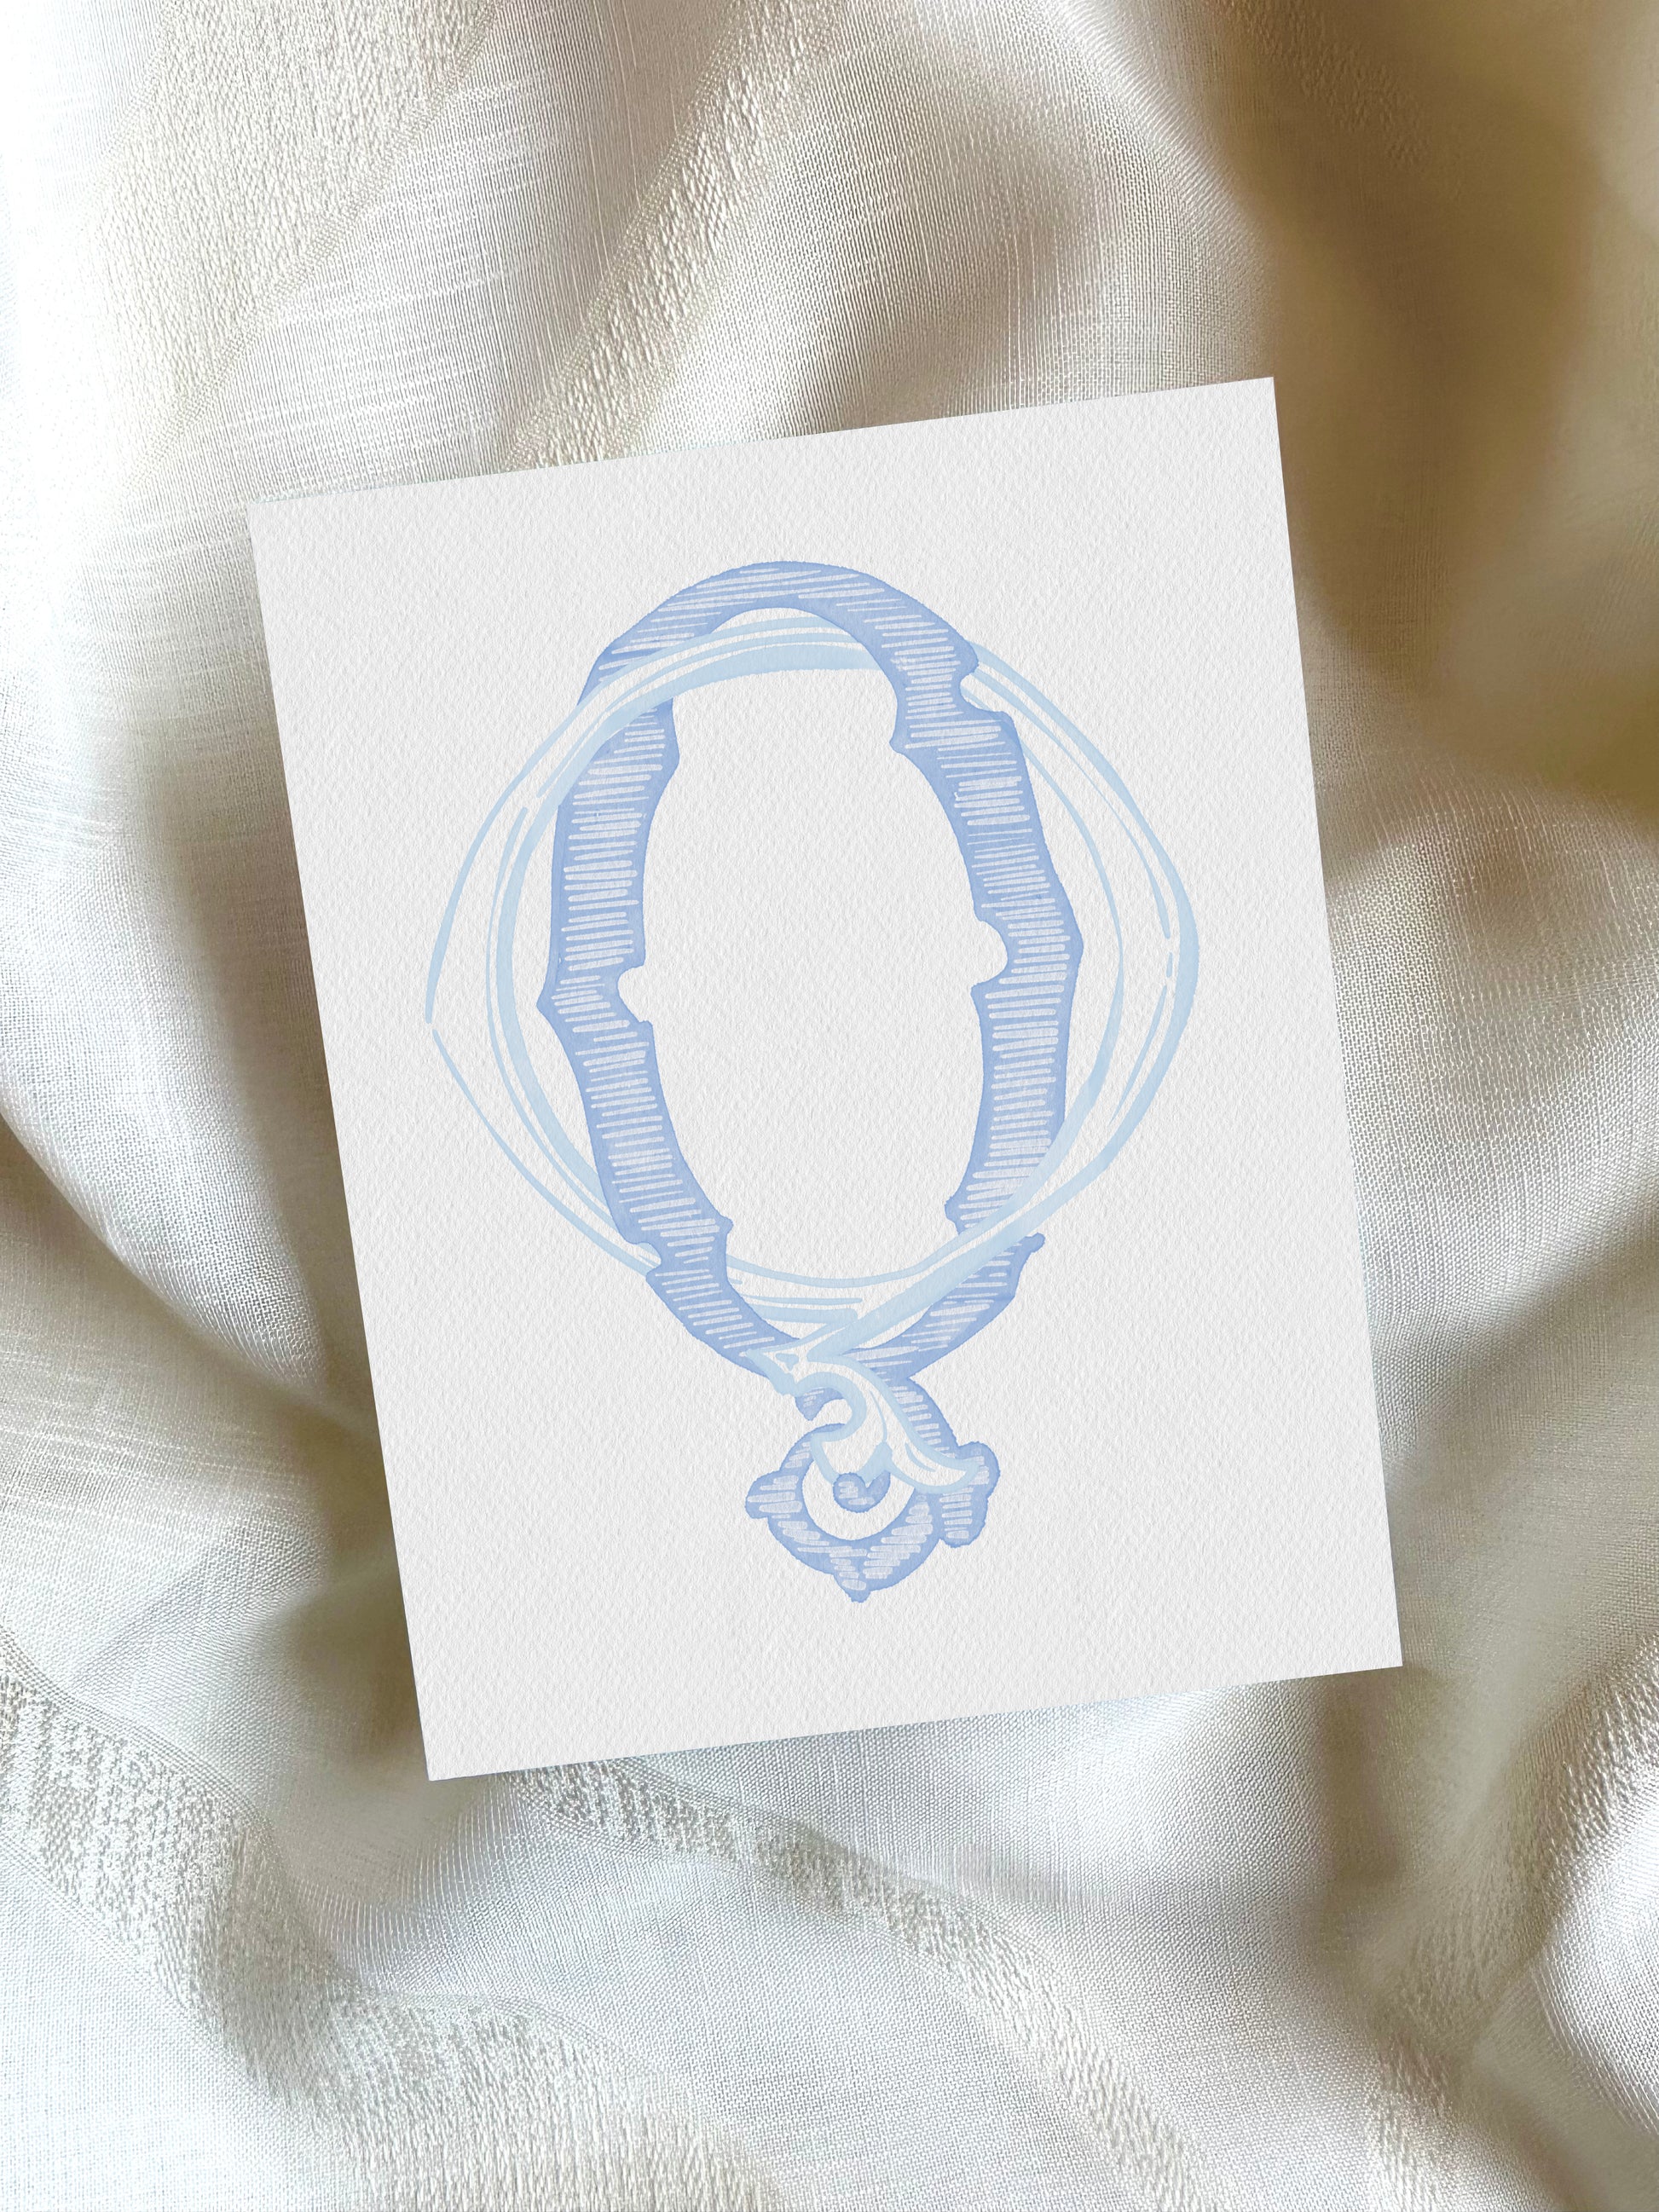 2 Letter Monogram with Letters QQ | Digital Download - Wedding Monogram SVG, Personal Logo, Wedding Logo for Wedding Invitations The Wedding Crest Lab